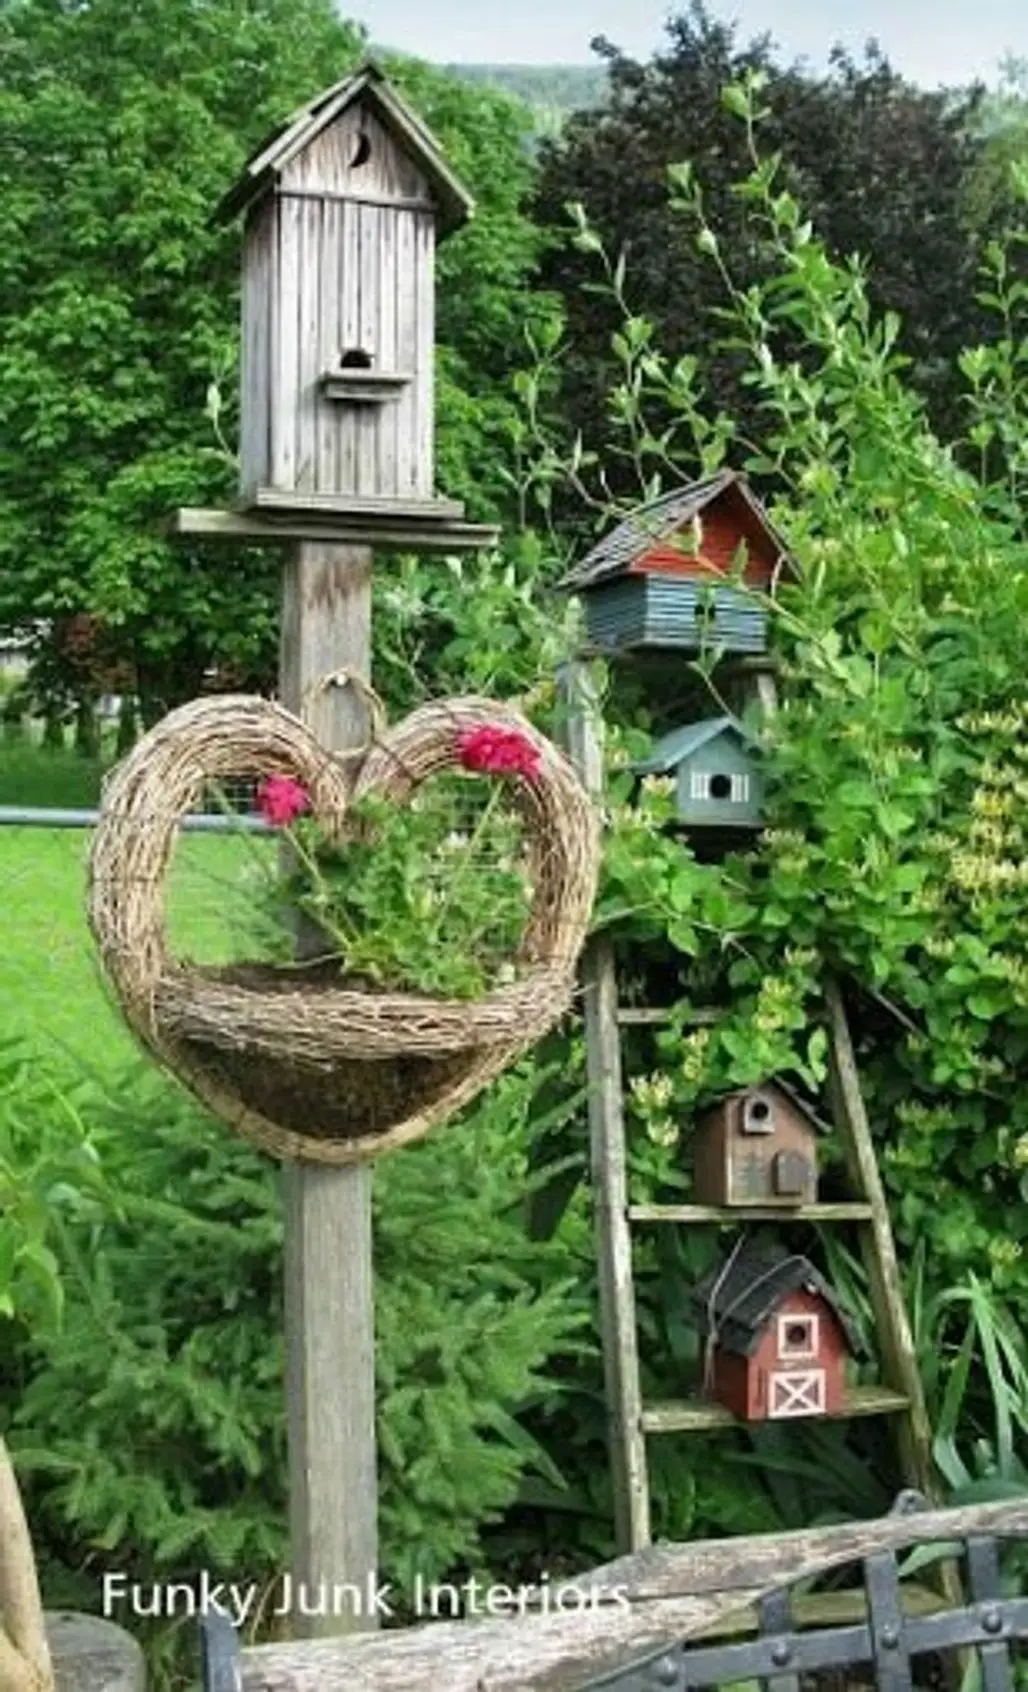 Birdhouse Collection